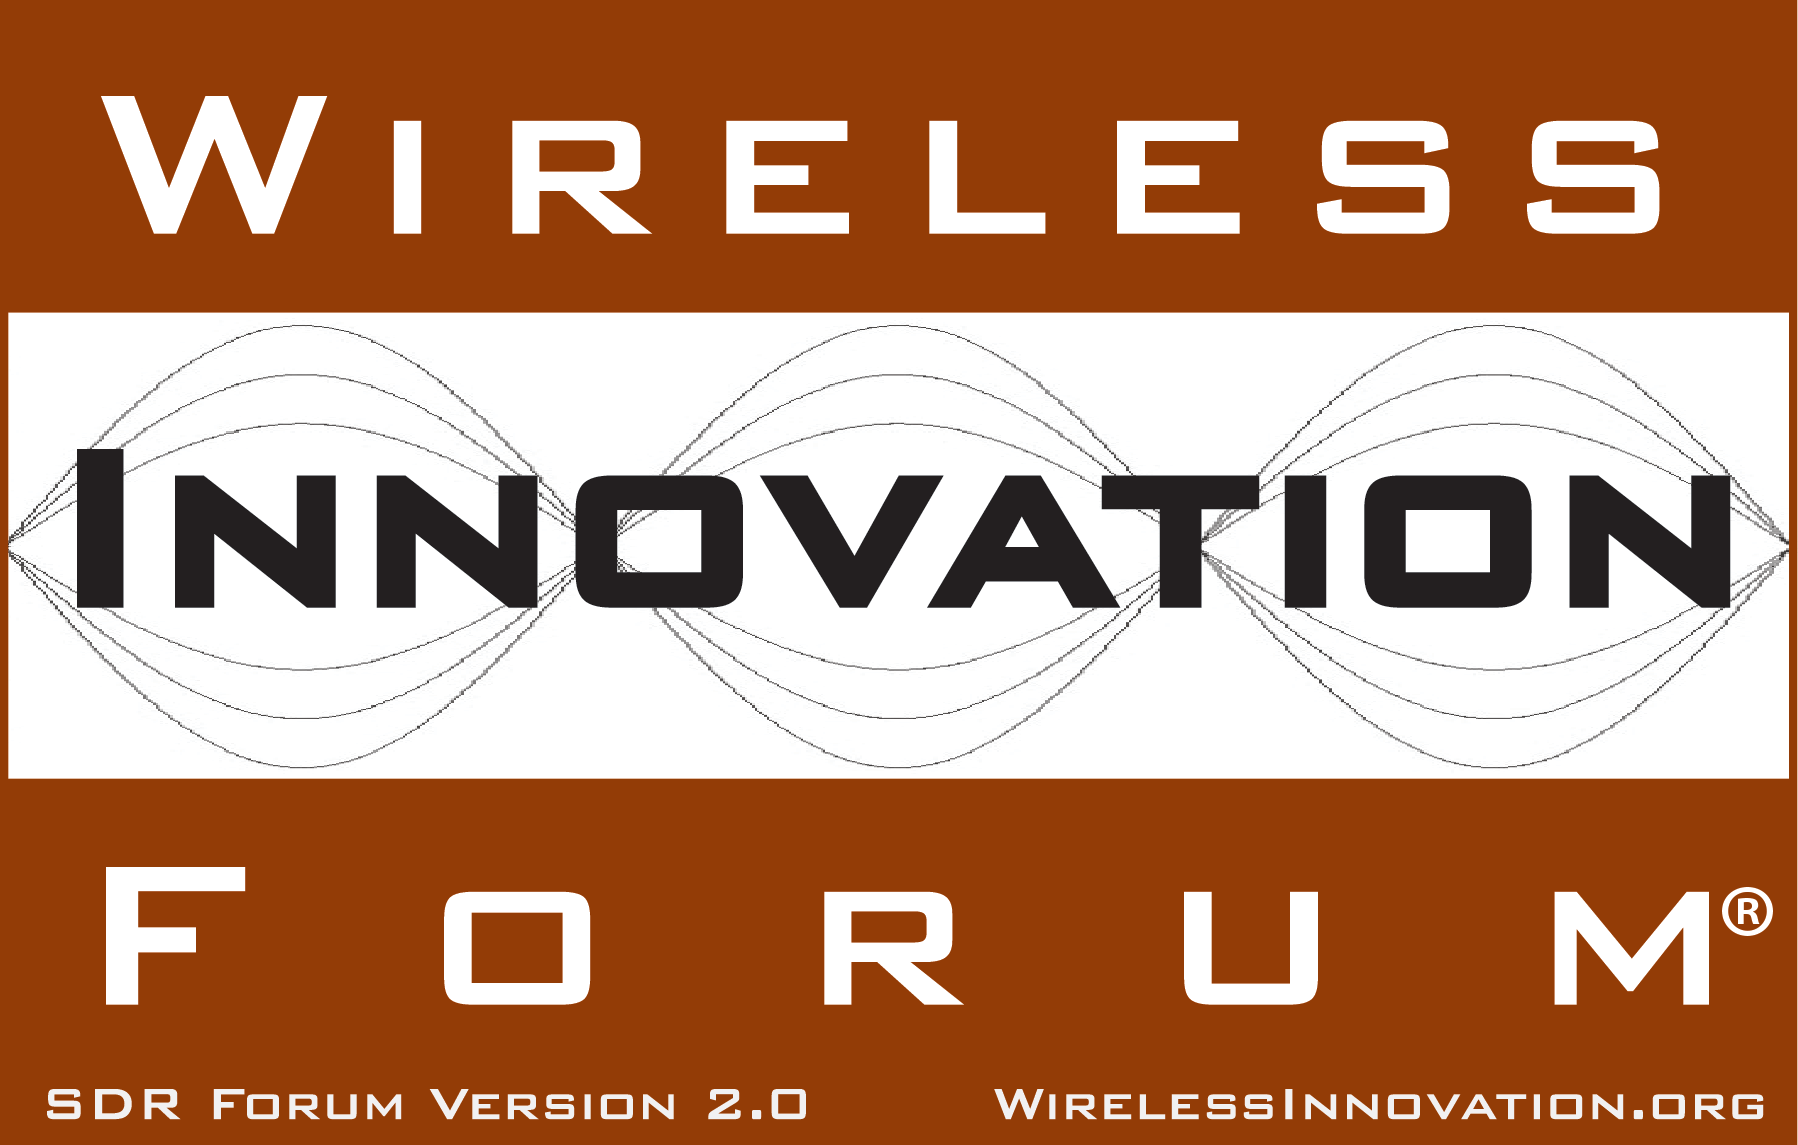 SpectrumX and Wireless Innovation Forum announce new partnership